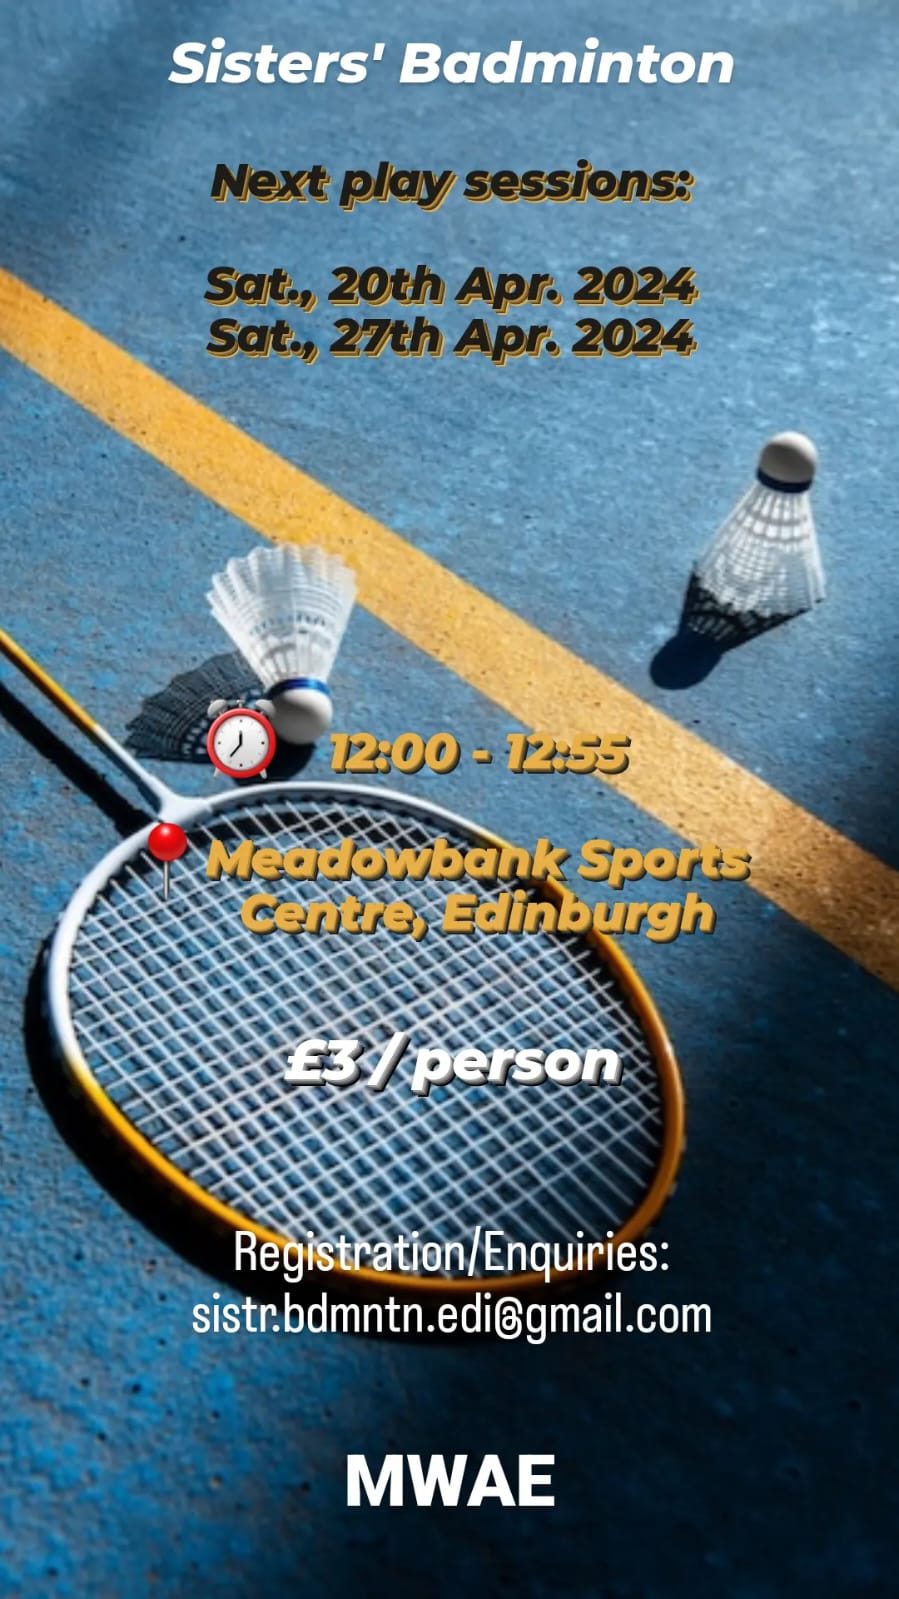 Next Badminton play session for ladies:  Saturday 20/04/24  Saturday 27/04/24  £3 per person,  12:00-12:55pm  ー  Meadowbank Sports  Centre, Edinburgh  Registration necessary for participation.  Enquiries/registration by emailing:  sistr.bdmntn.edi@gmail.com